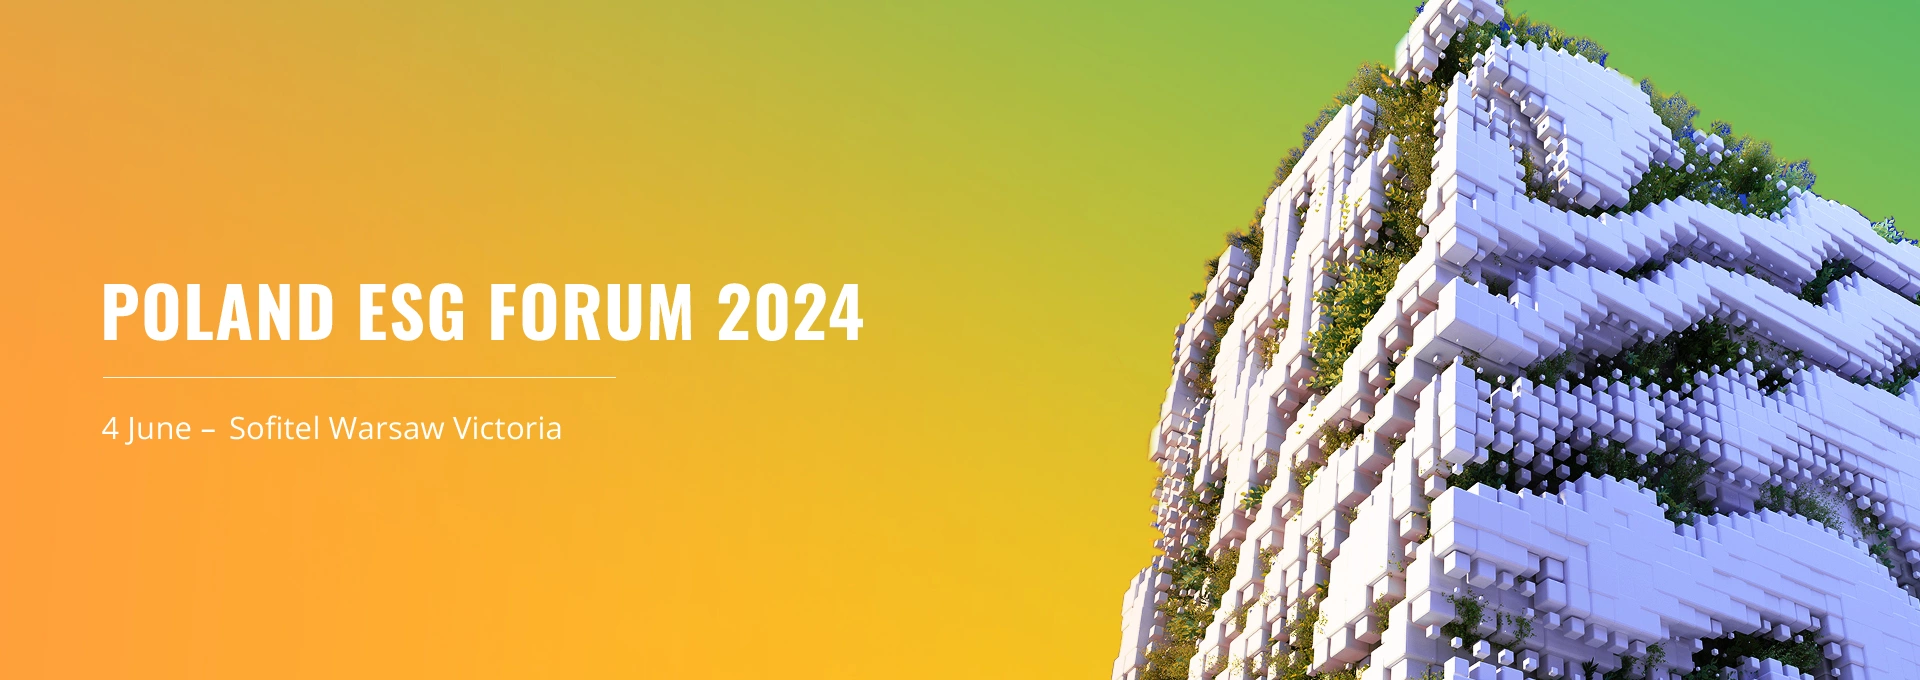 Poland ESG Forum 2024